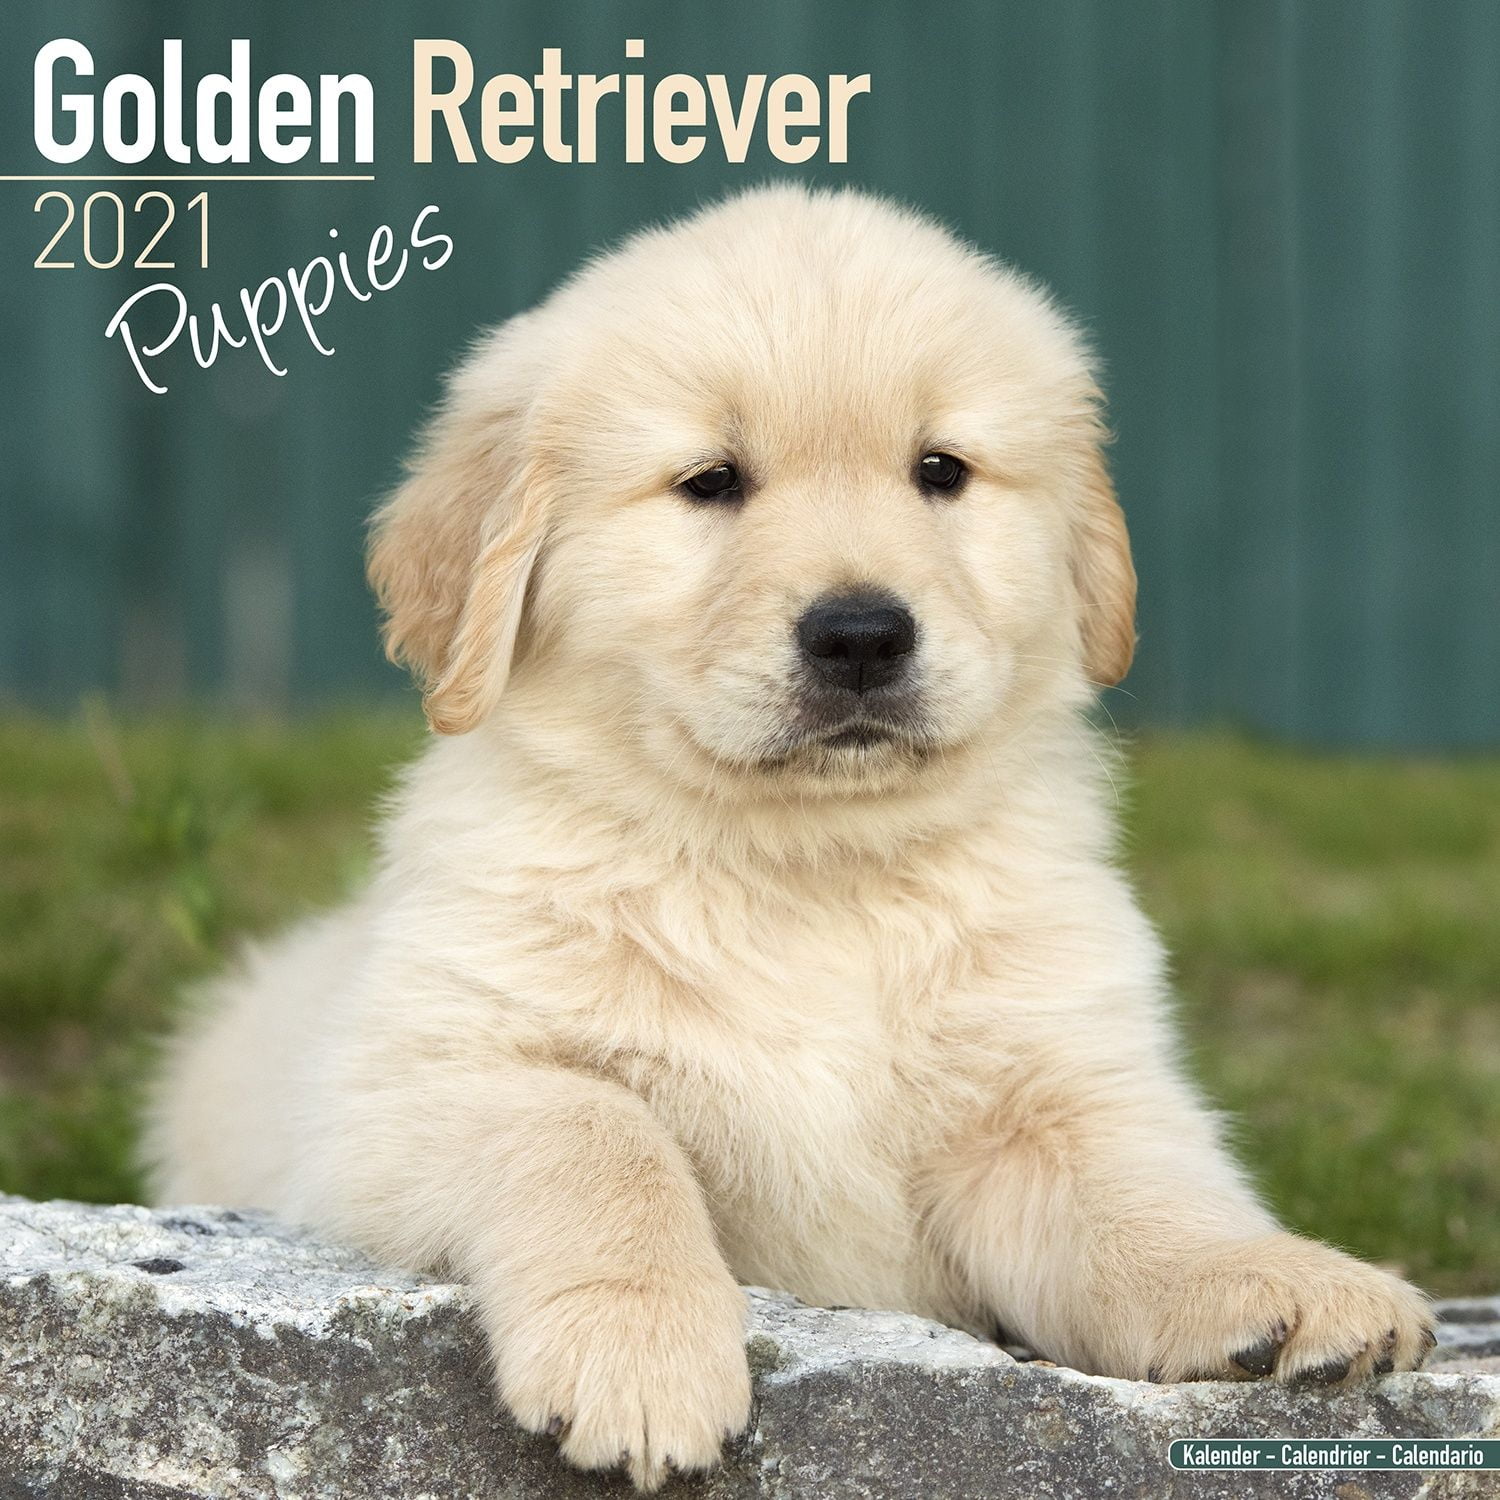 golden retriever puppy snoring